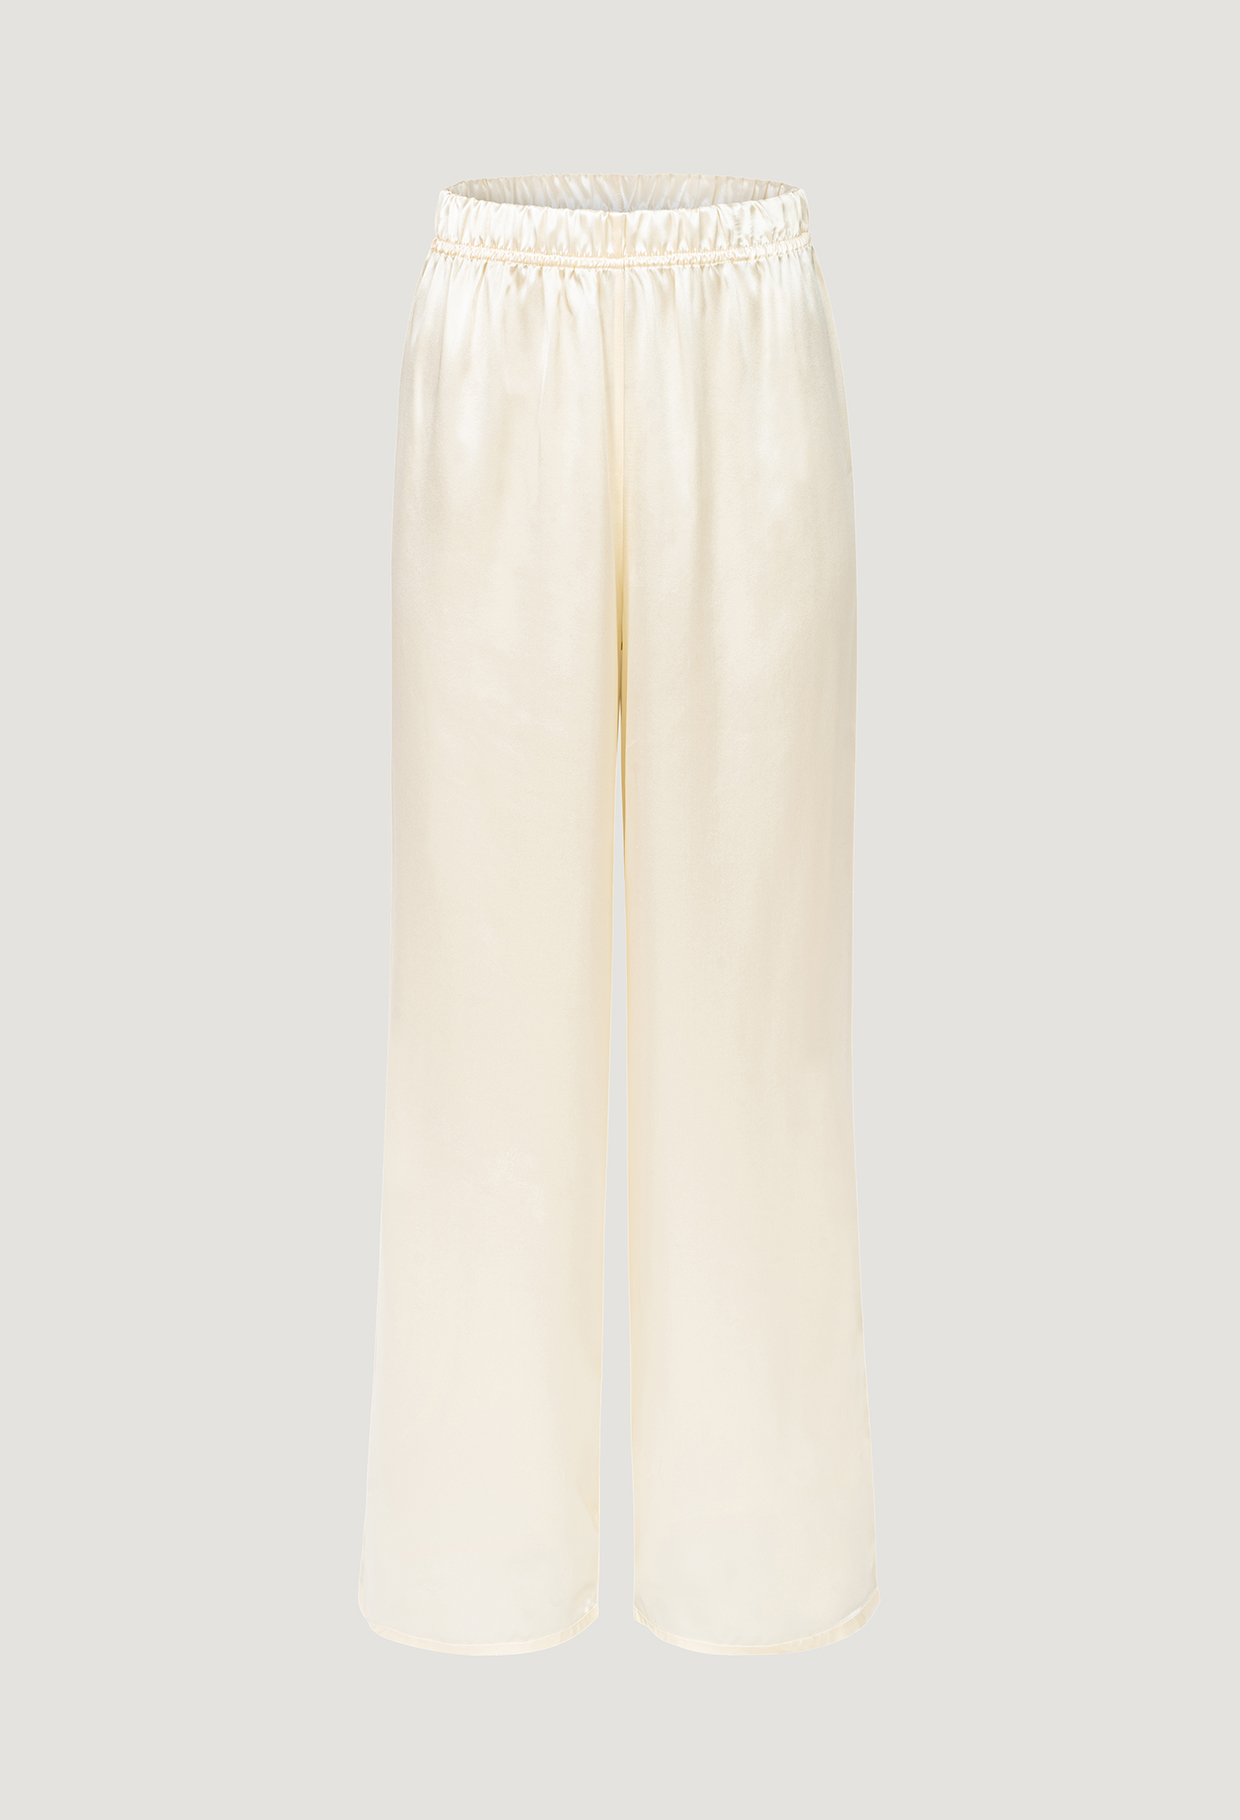 Silk creme pants with high waist and wide leg